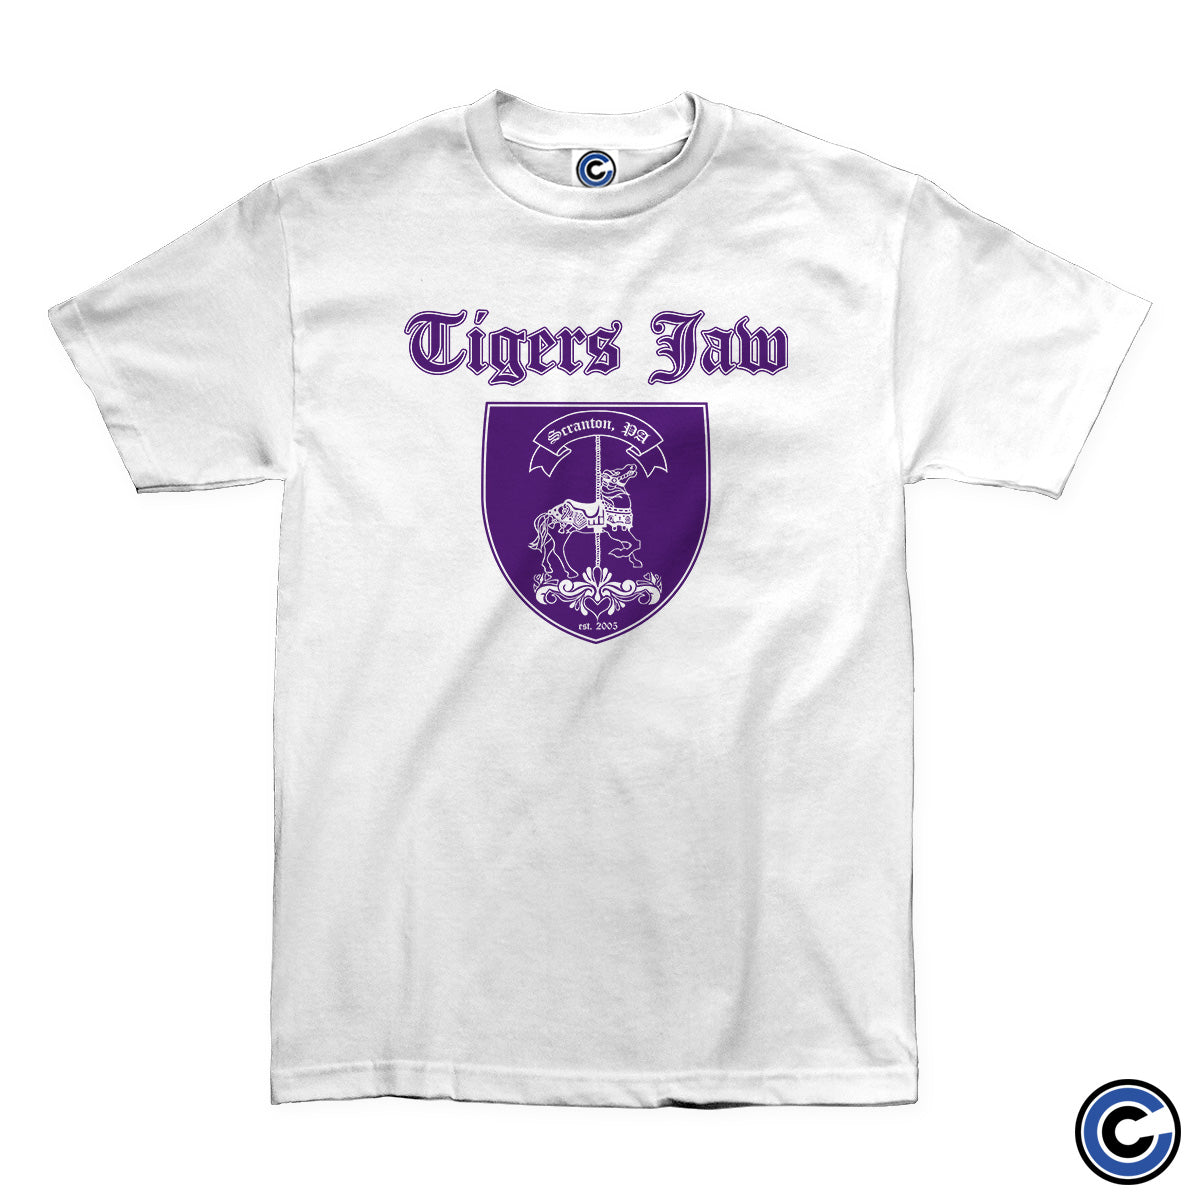 Tigers Jaw "Old English" Shirt